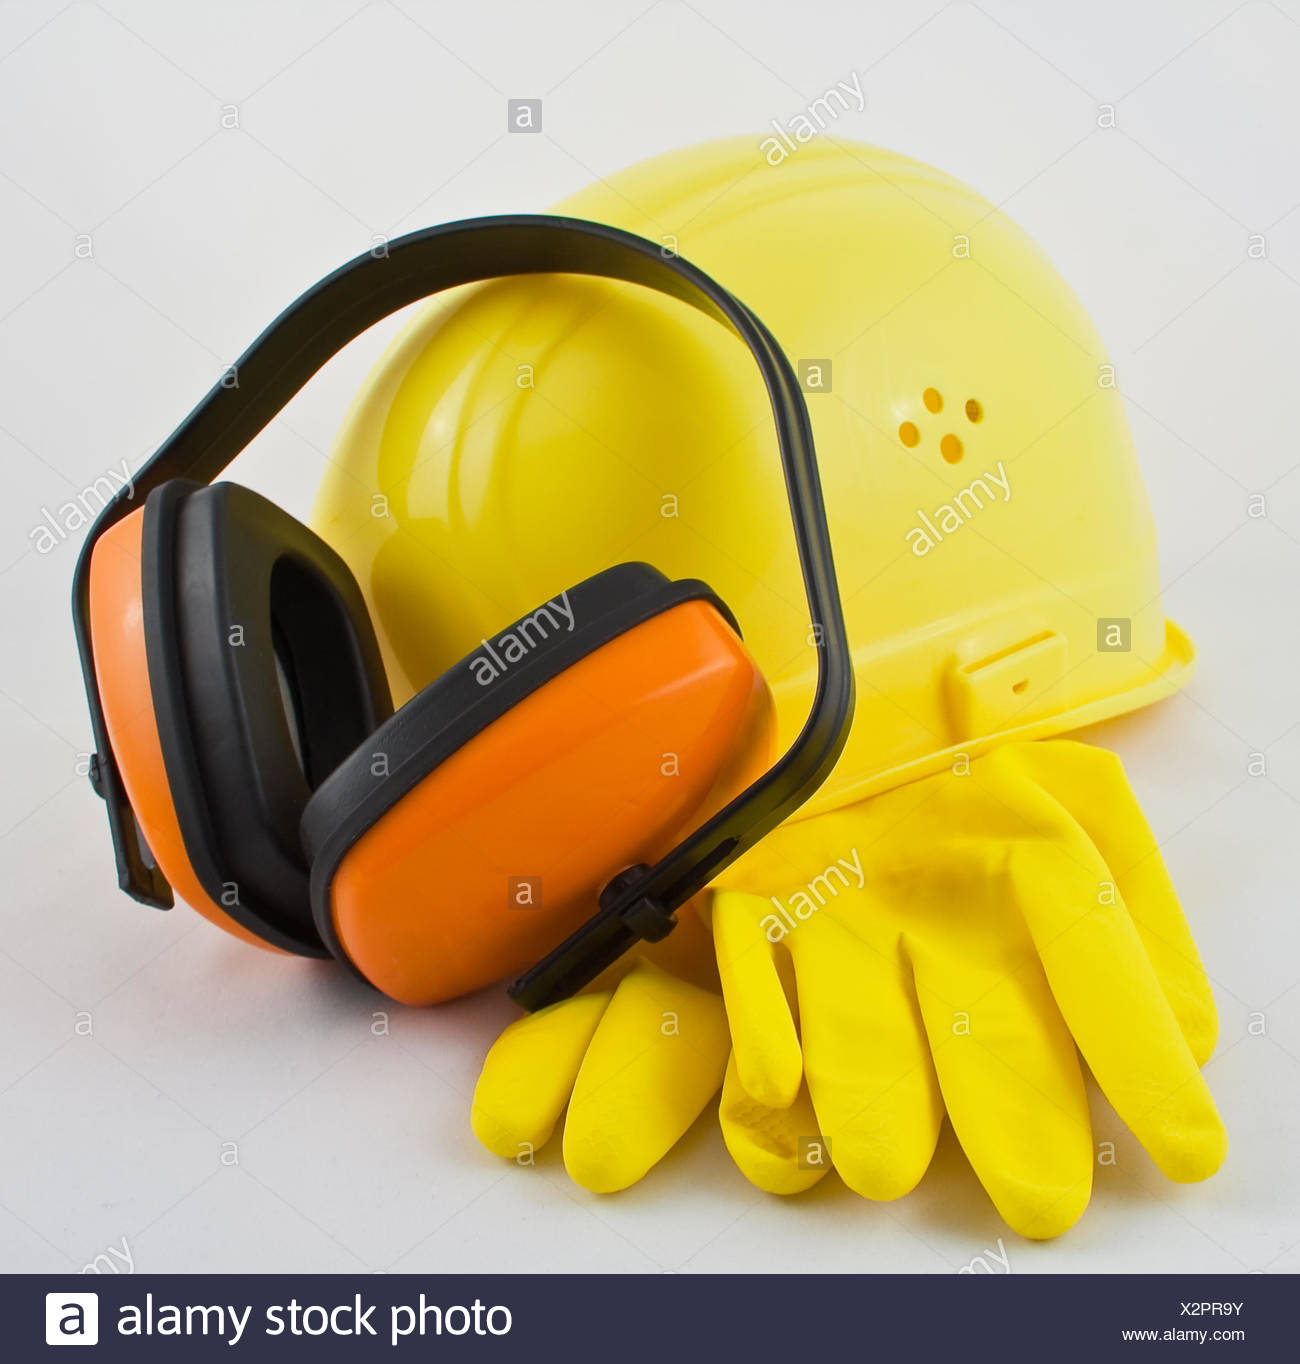 earphones-headphones-gloves-security-safety-construction-isolated-industrial-X2PR9Y.jpg